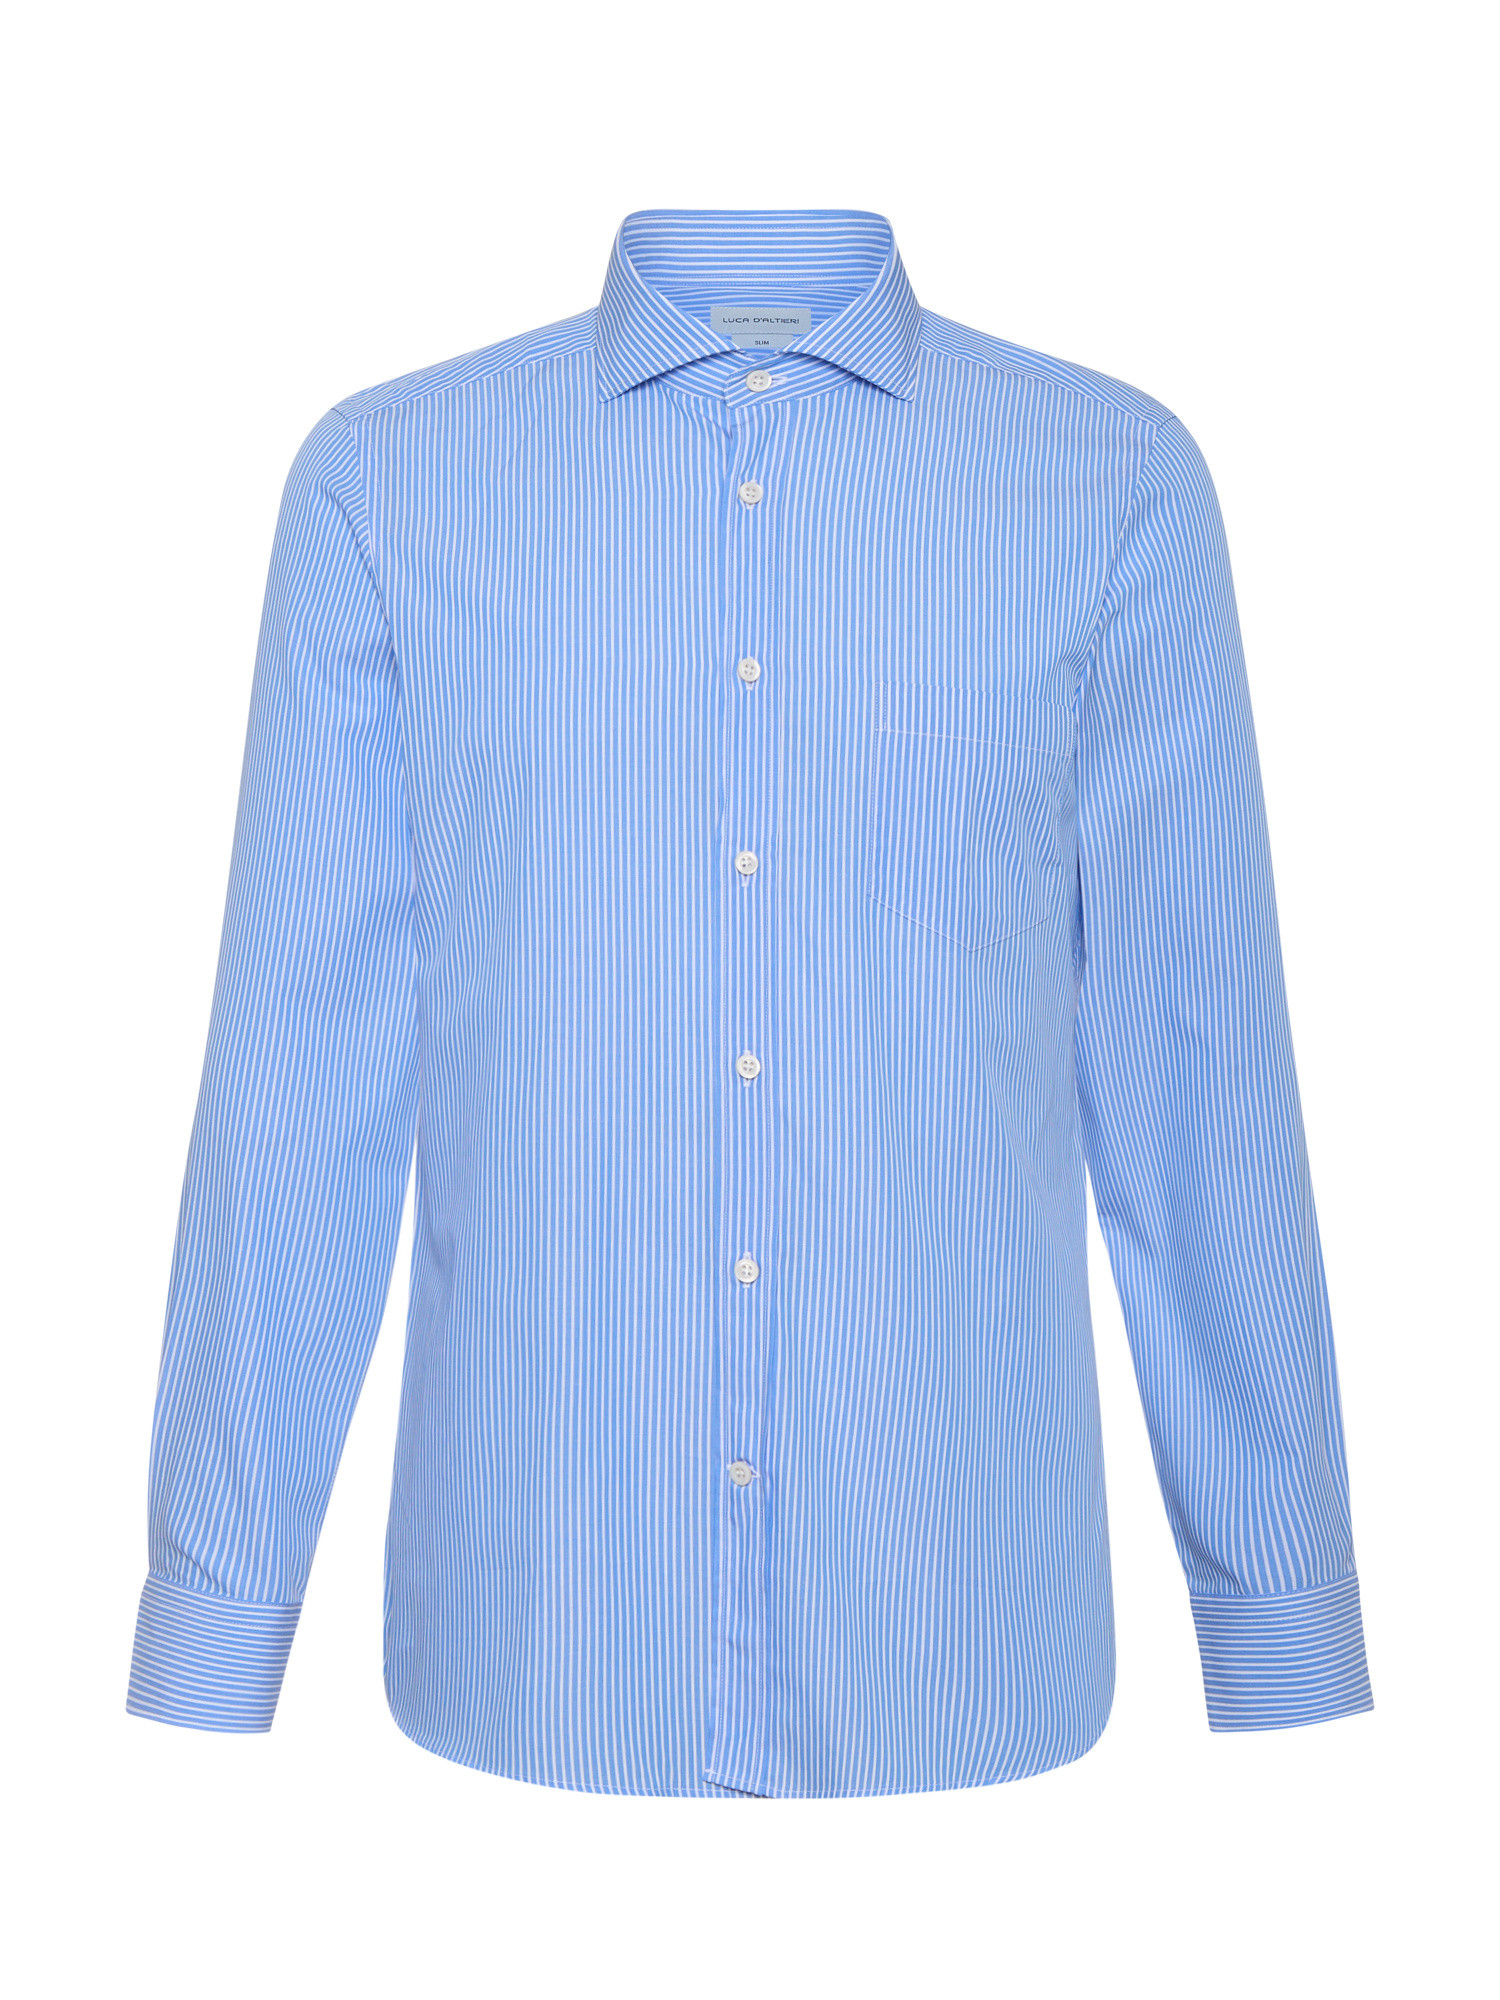 Luca D'Altieri - Casual slim fit shirt in pure cotton poplin, Light Blue, large image number 1